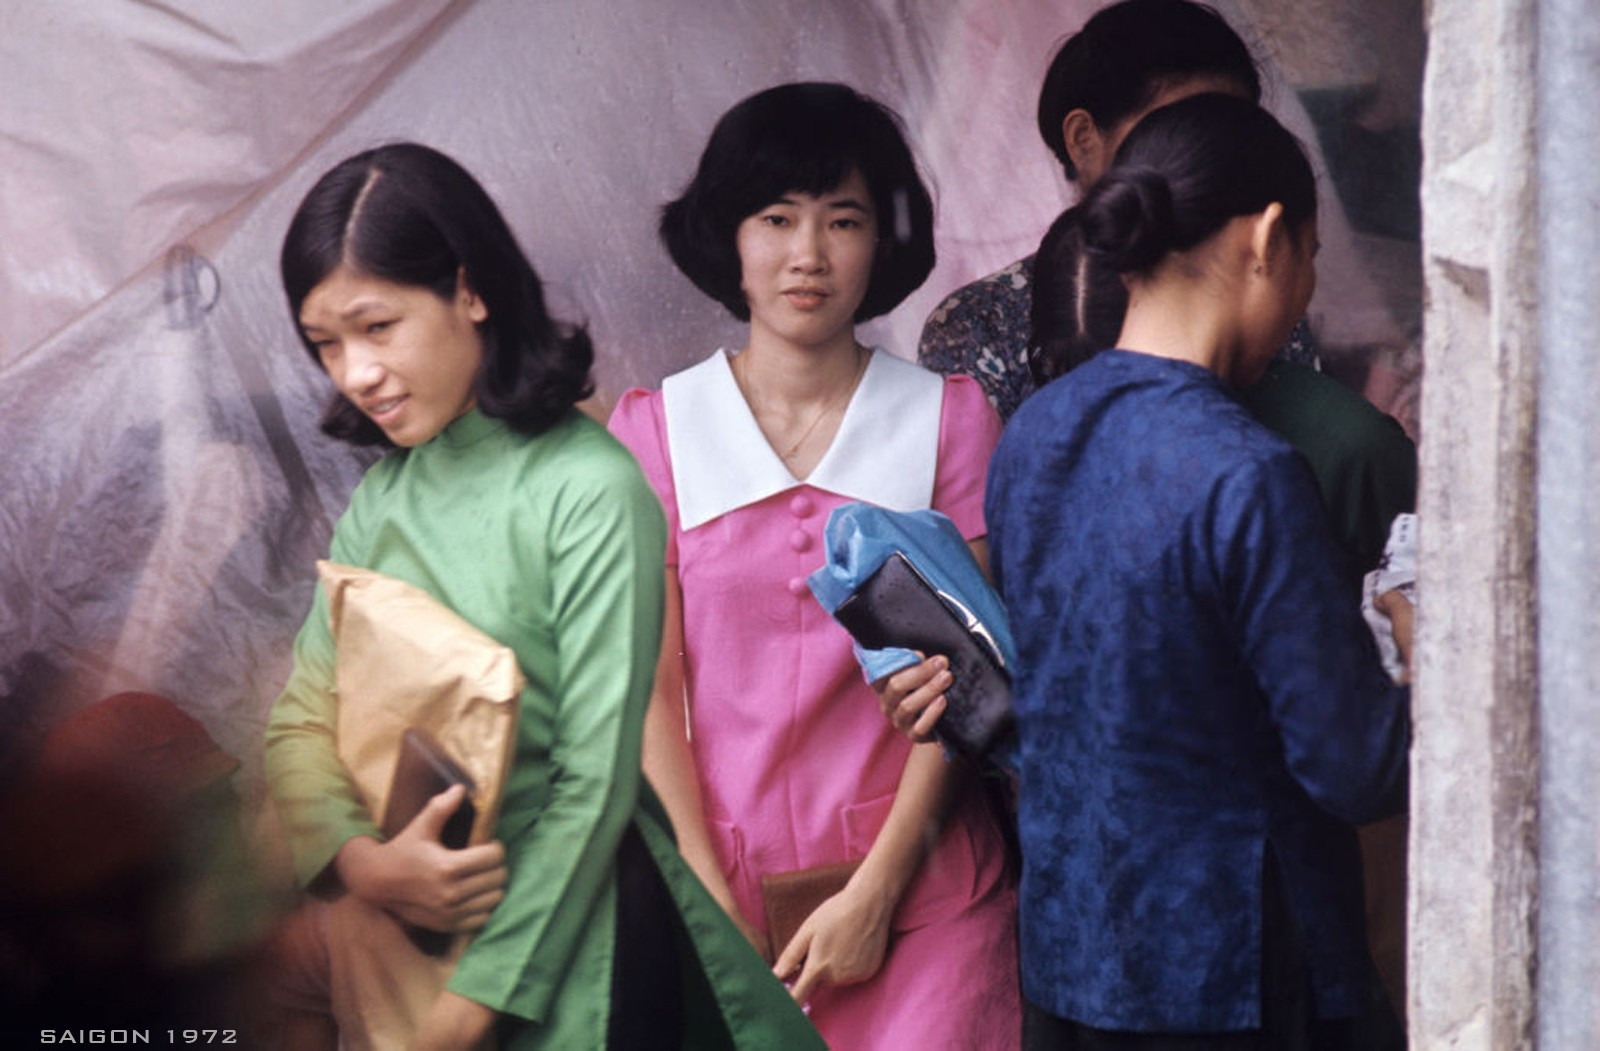 interesting photos of saigon women in 1972 under us photographers lens